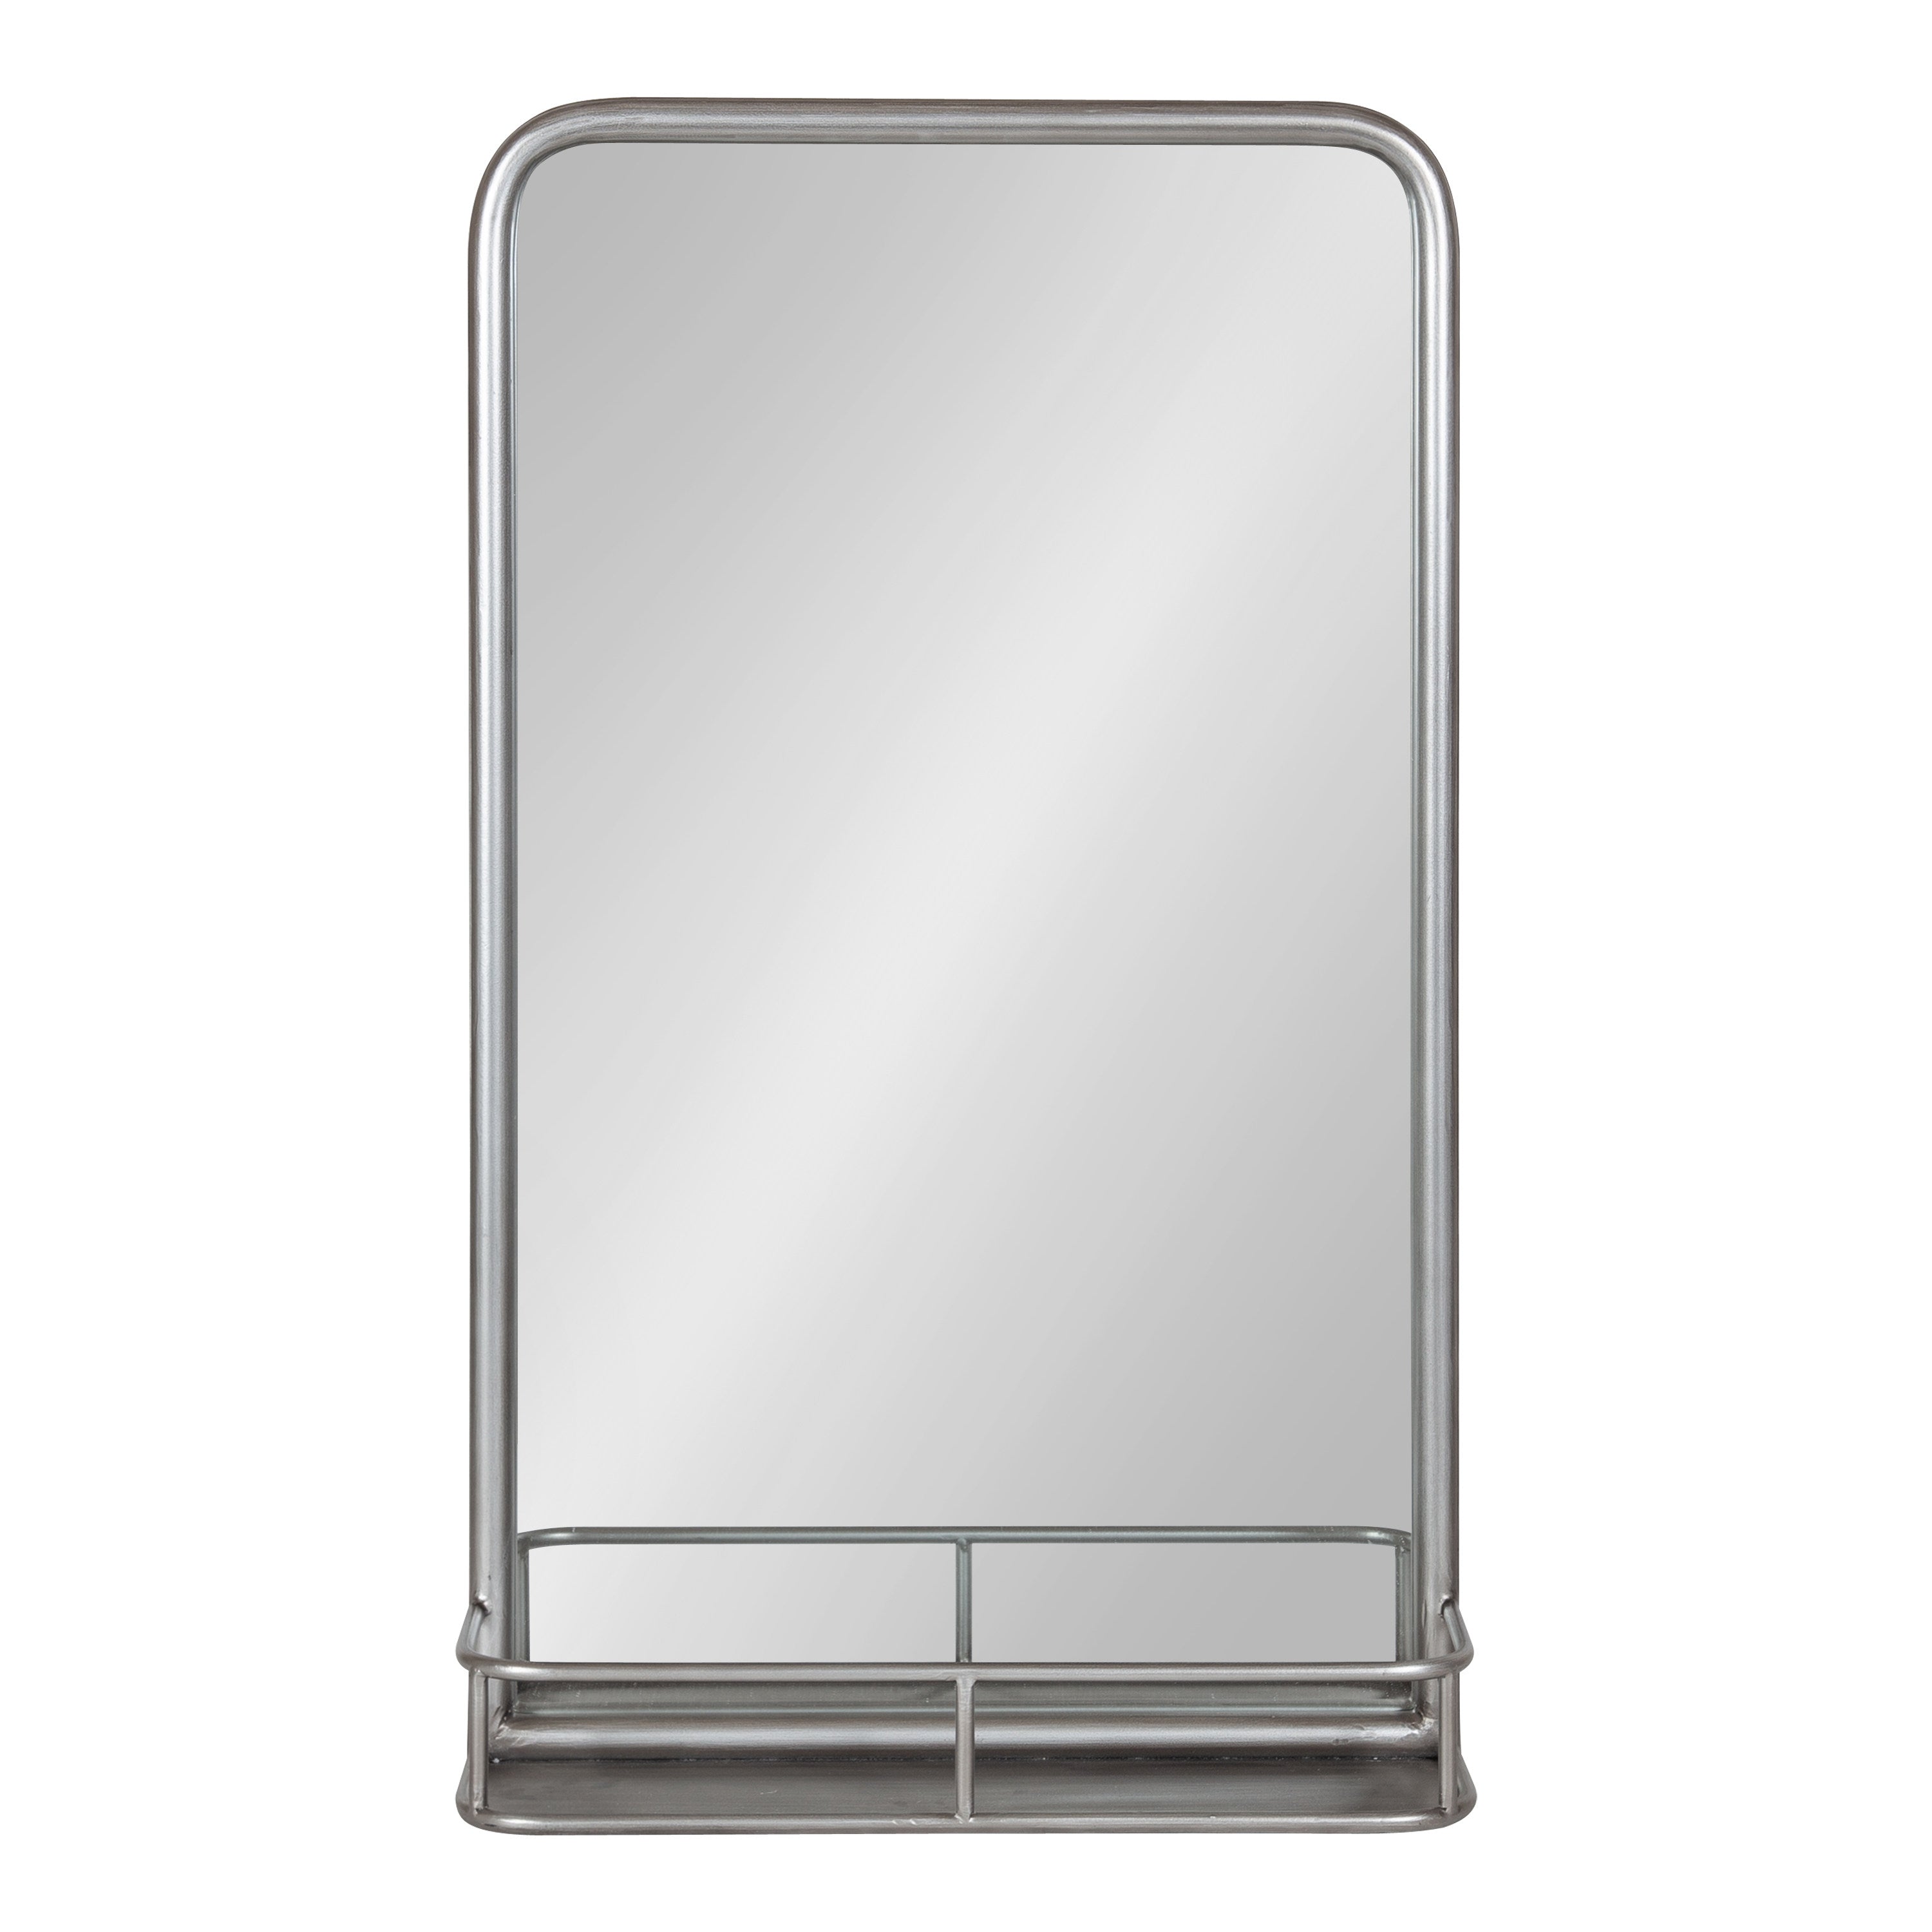 Estero Metal Framed Radius Rectangle Wall Mirror with Shelf